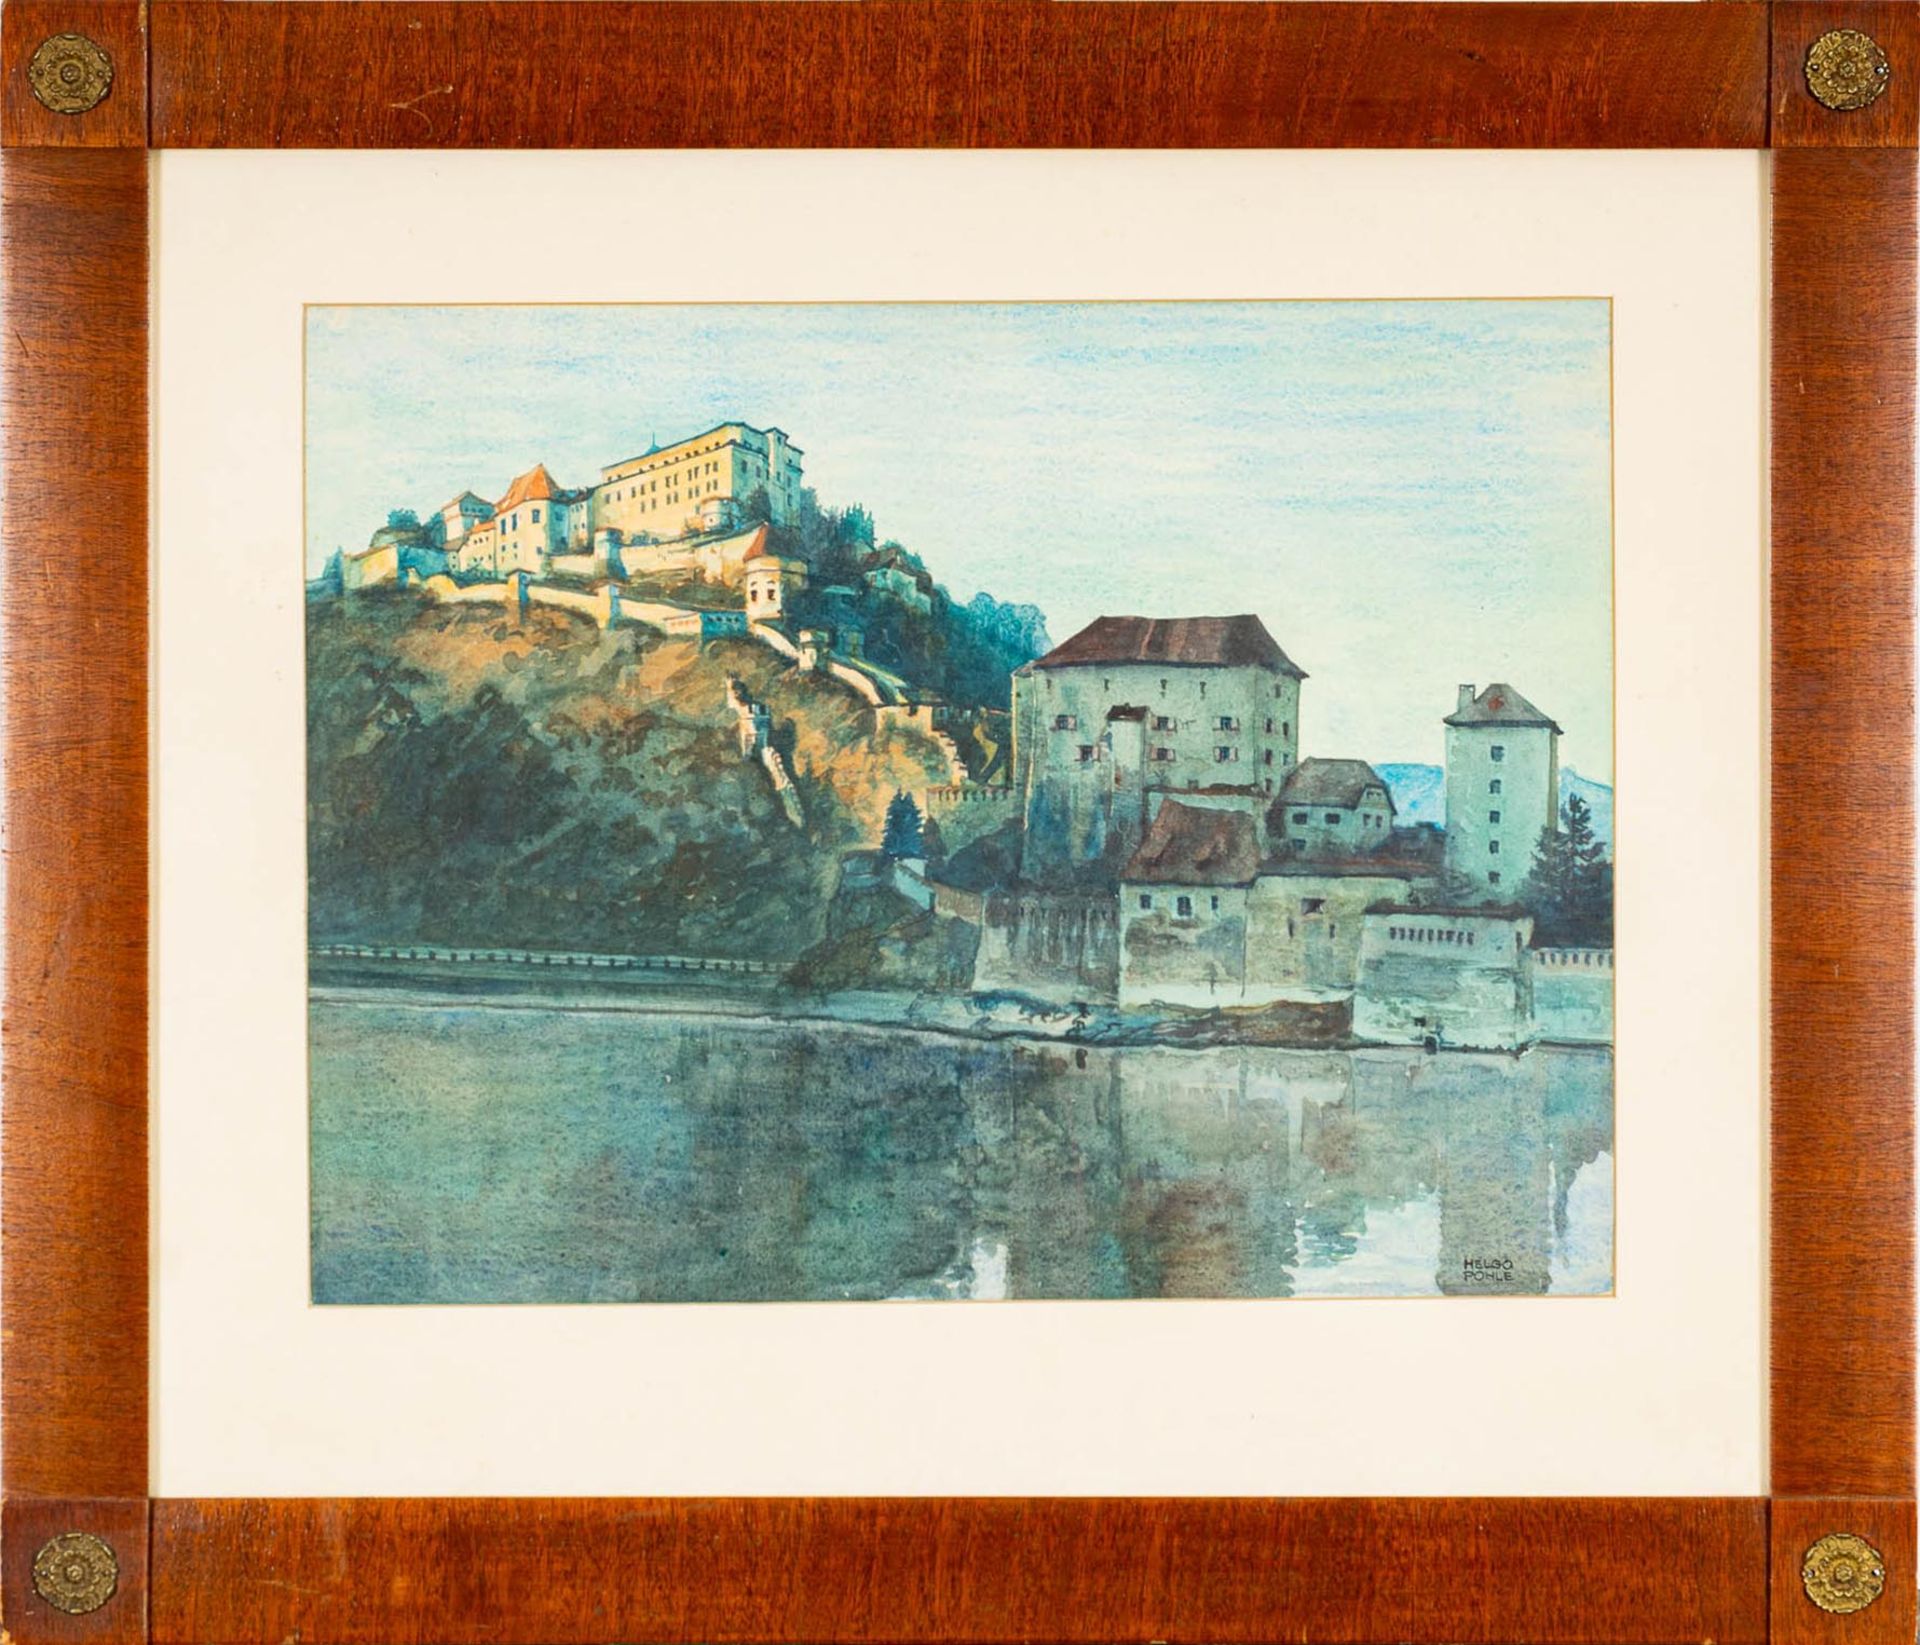 Farbdruck (?) des Helgo Pohle (1896 - 1973), ca. 33 x 43 cm. Hinter Glas in Passepartout gerahmt, S